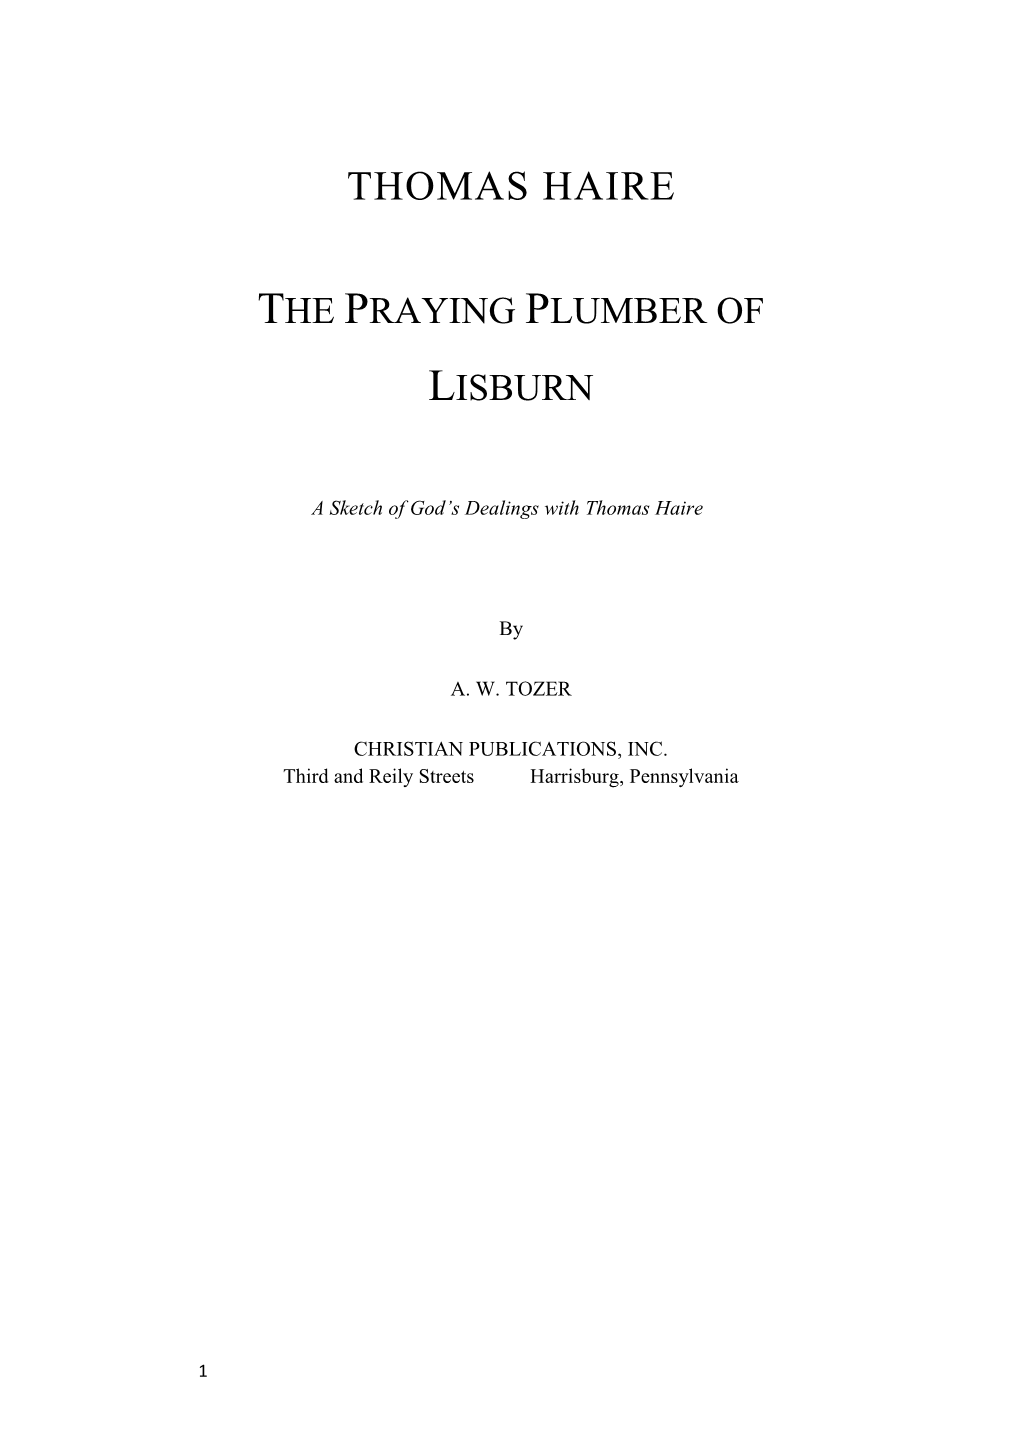 The Praying Plumber of Lisburn